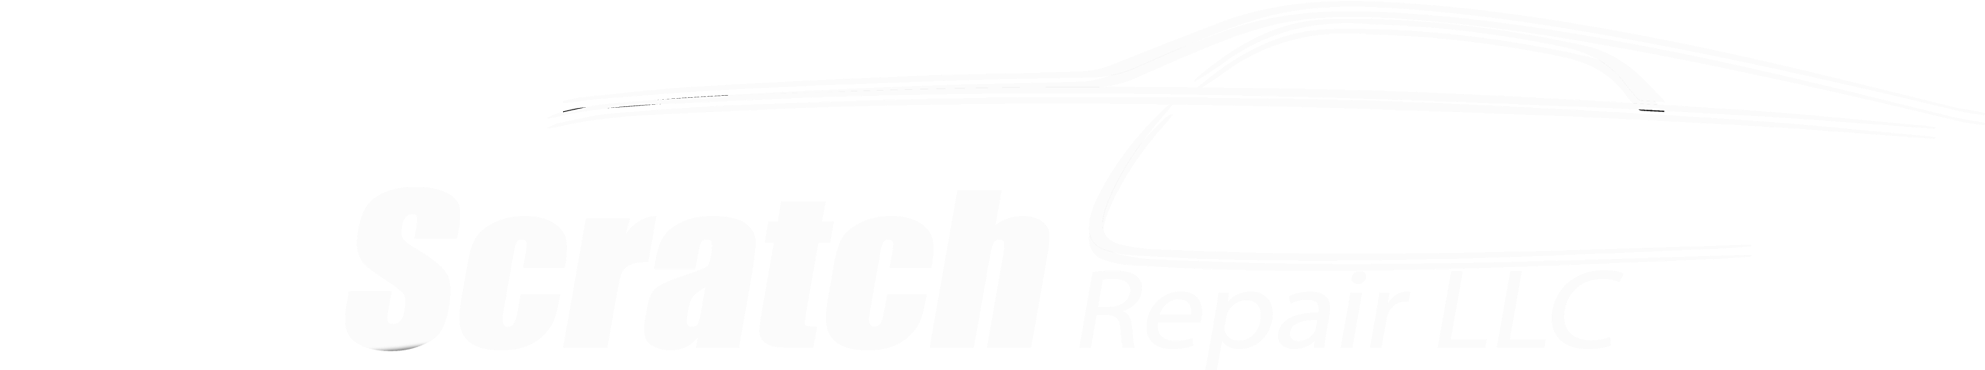 Mr Scratch Repair Llc - Money Back Guarantee (2000x1000), Png Download